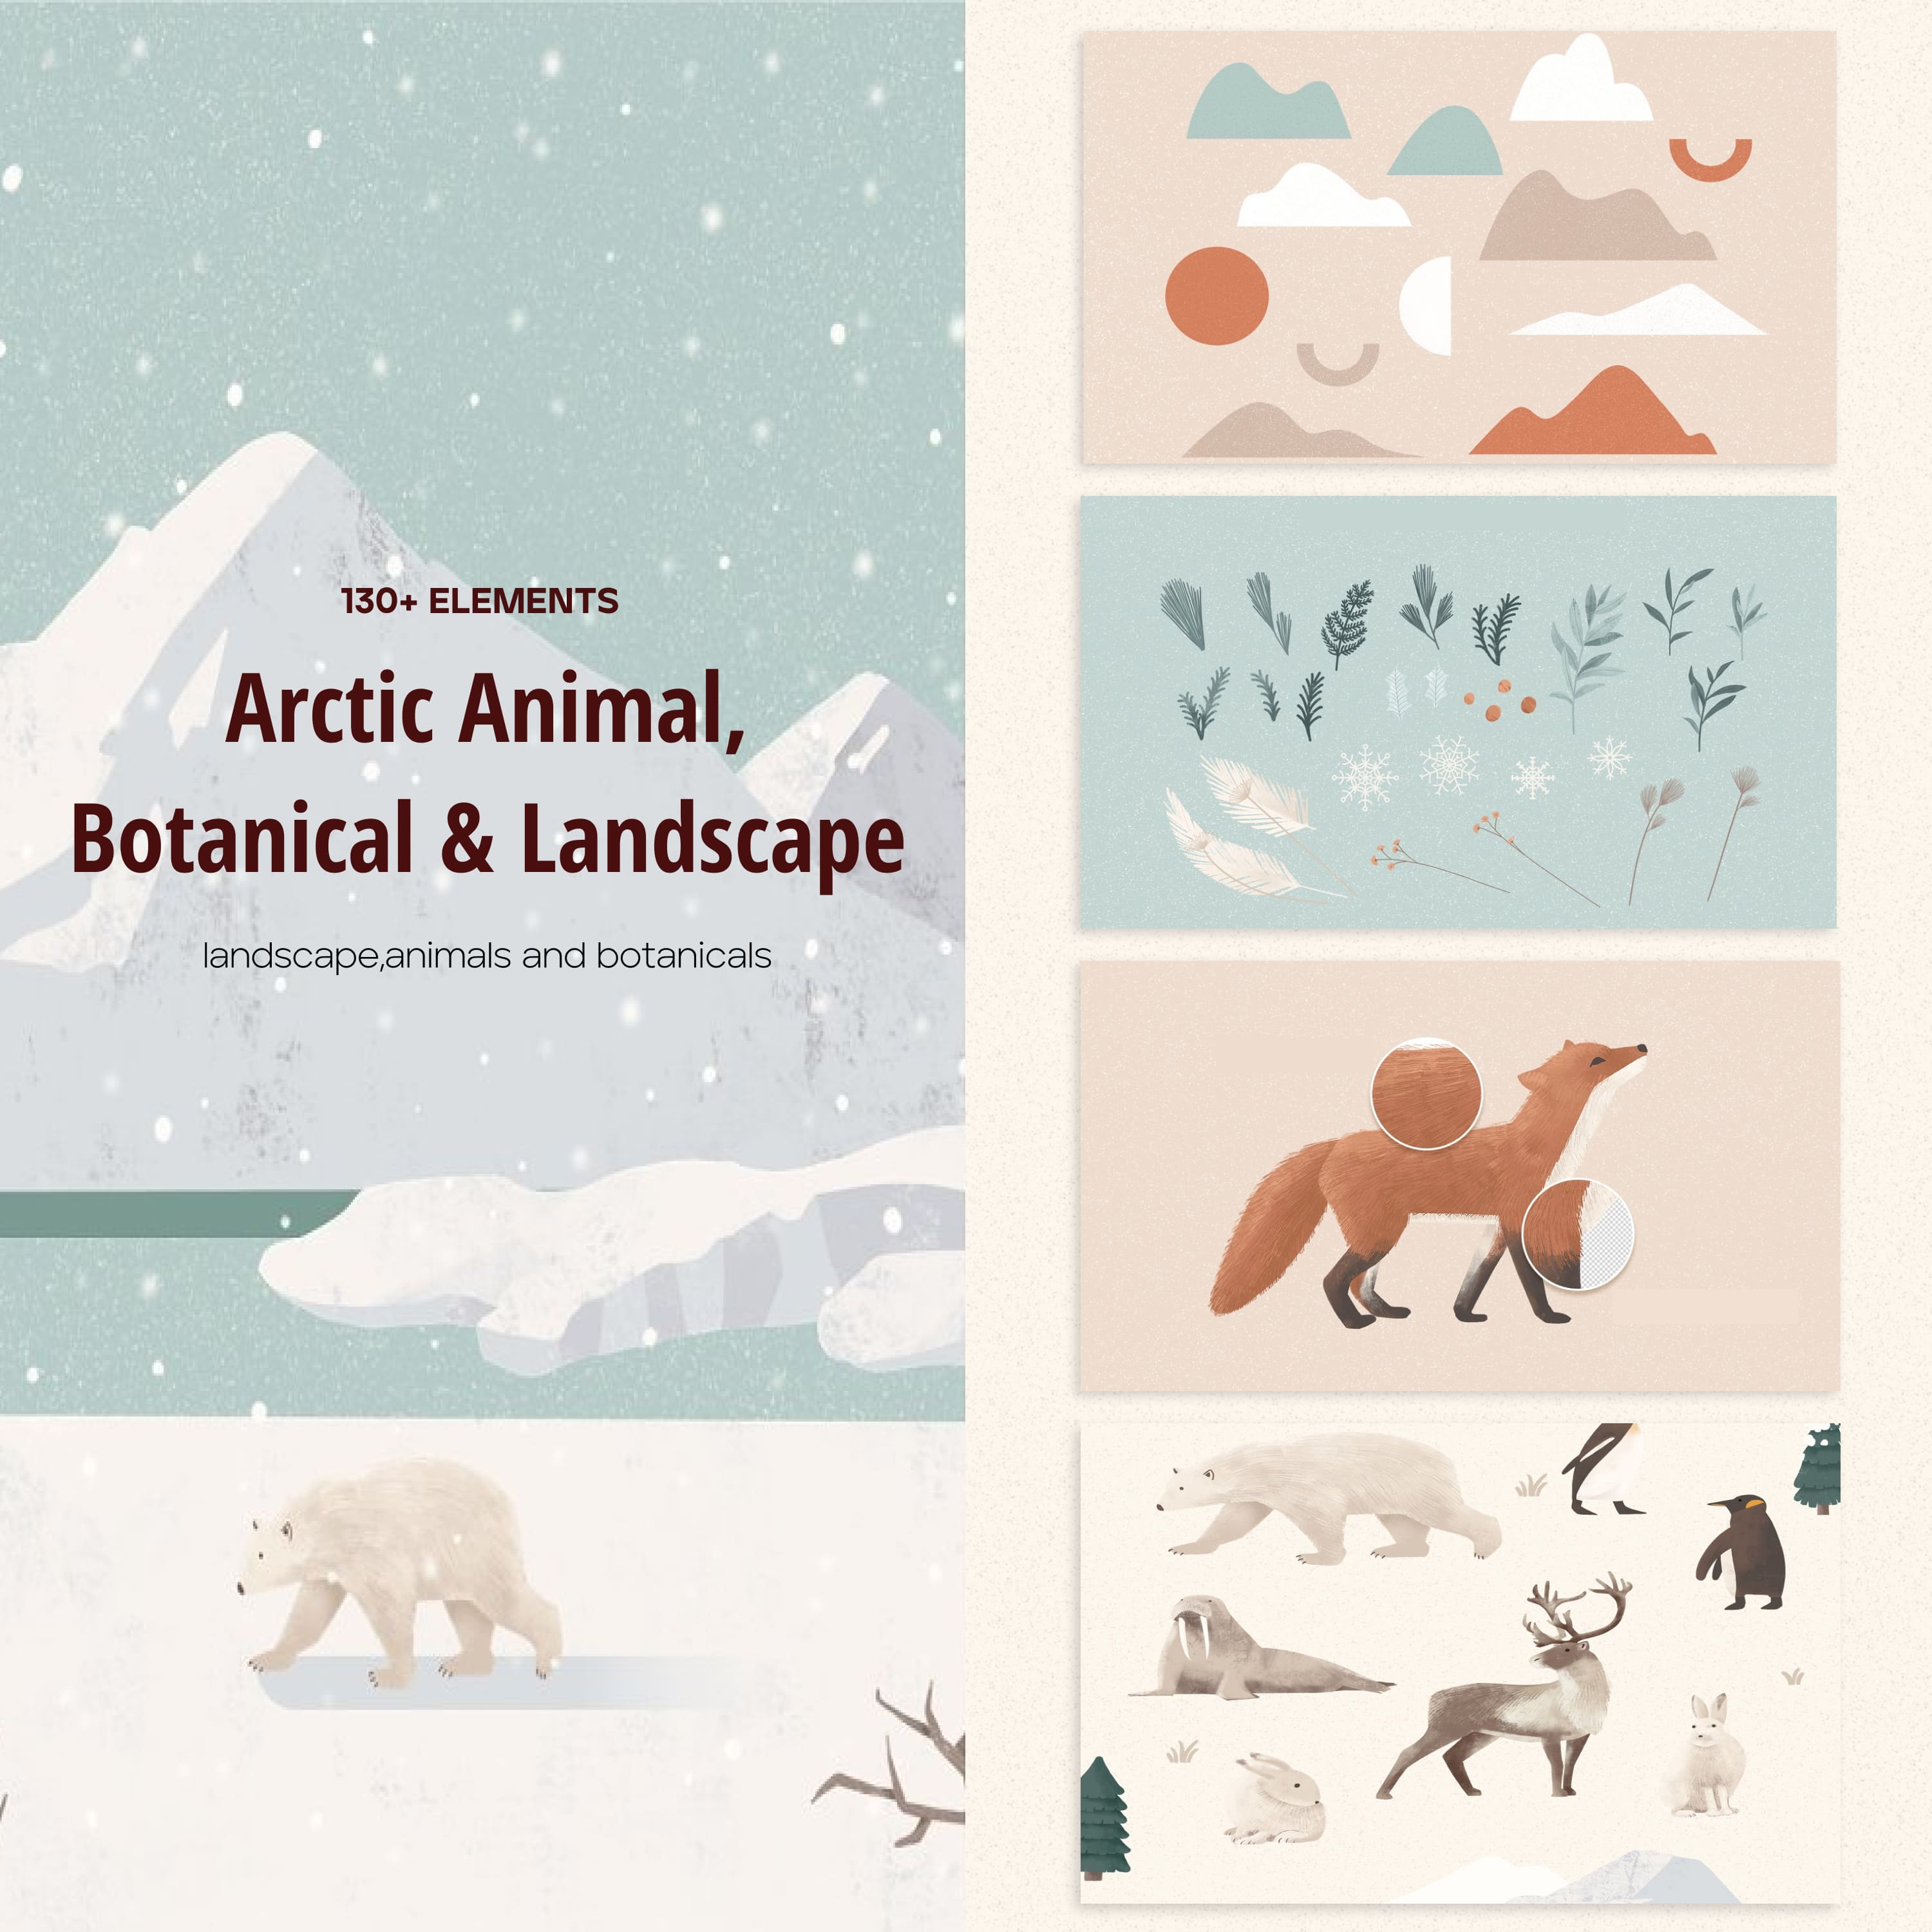 Arctic Animal, Botanical & Landscape cover.